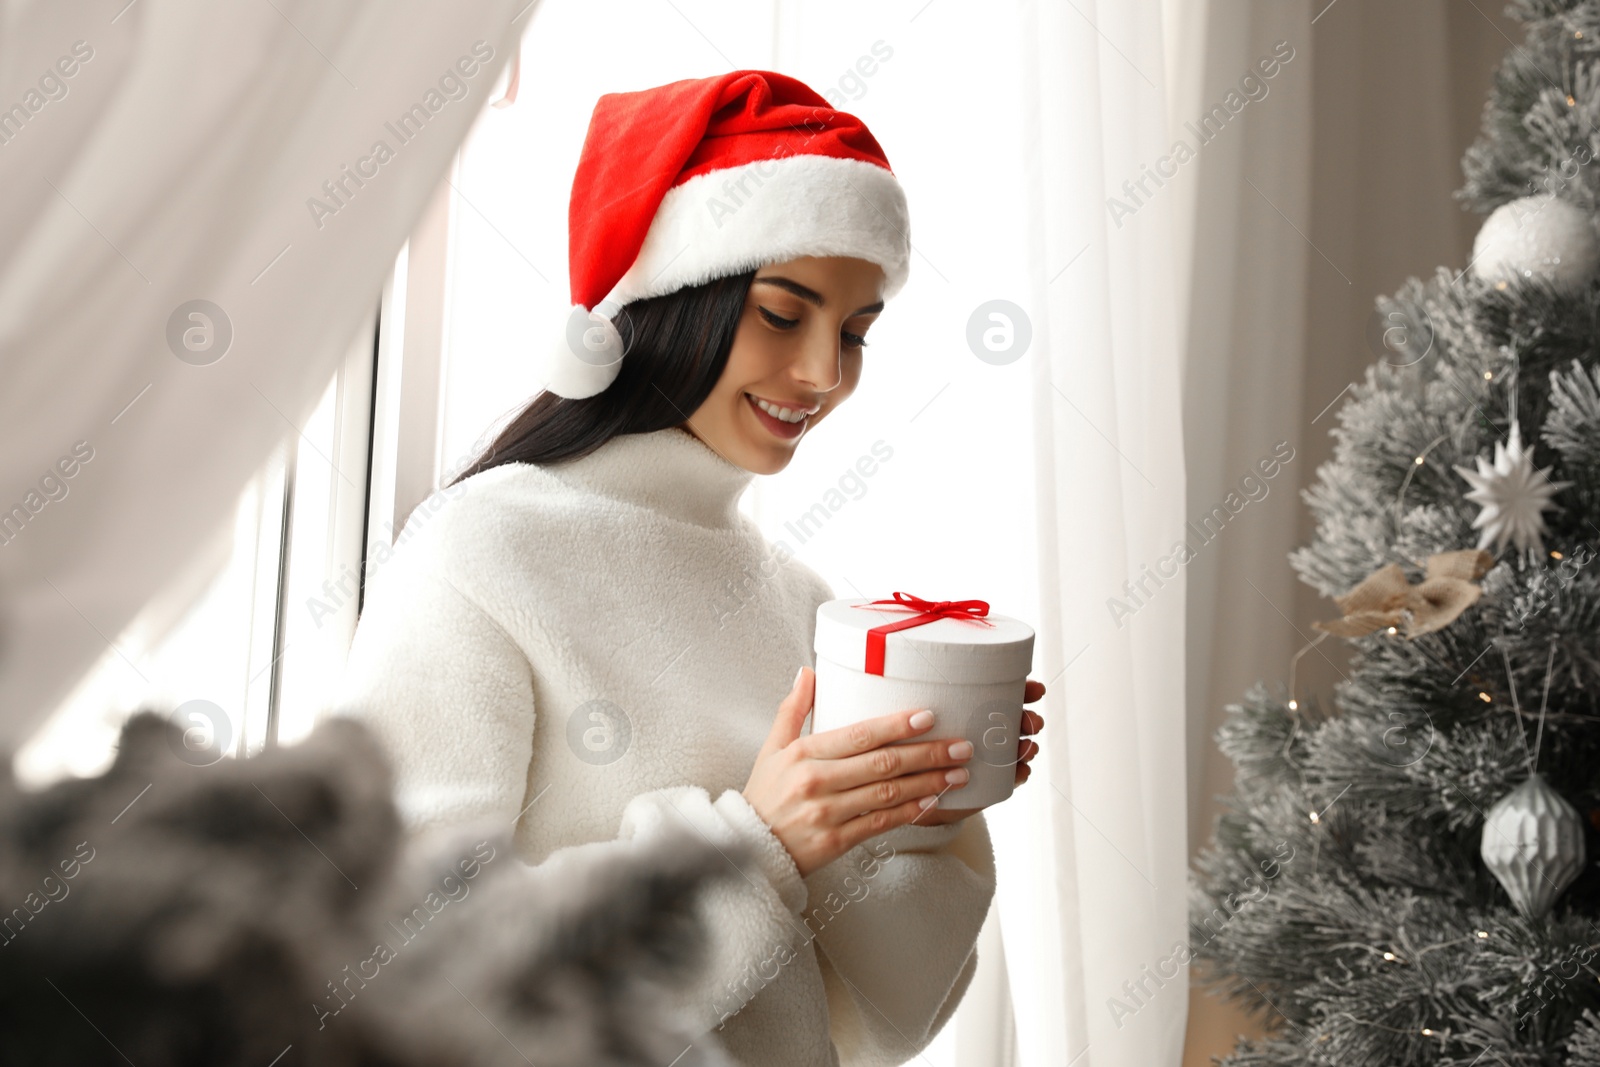 Photo of Woman in Santa hat holding gift box near Christmas tree